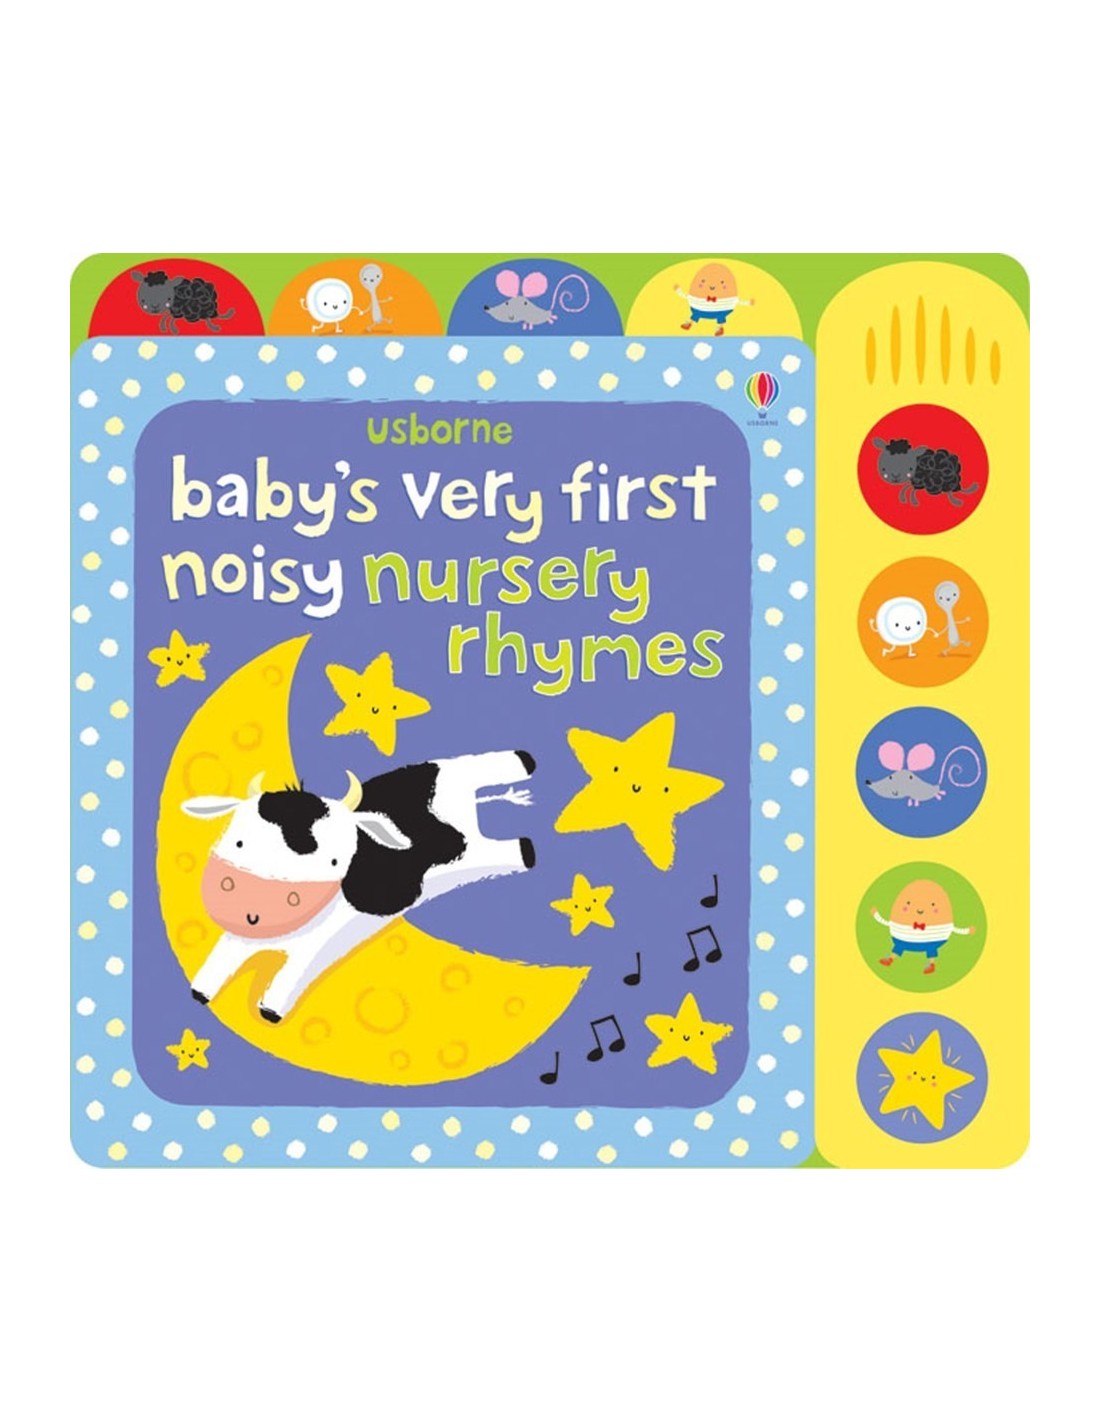 Baby's very first noisy nursery rhymes